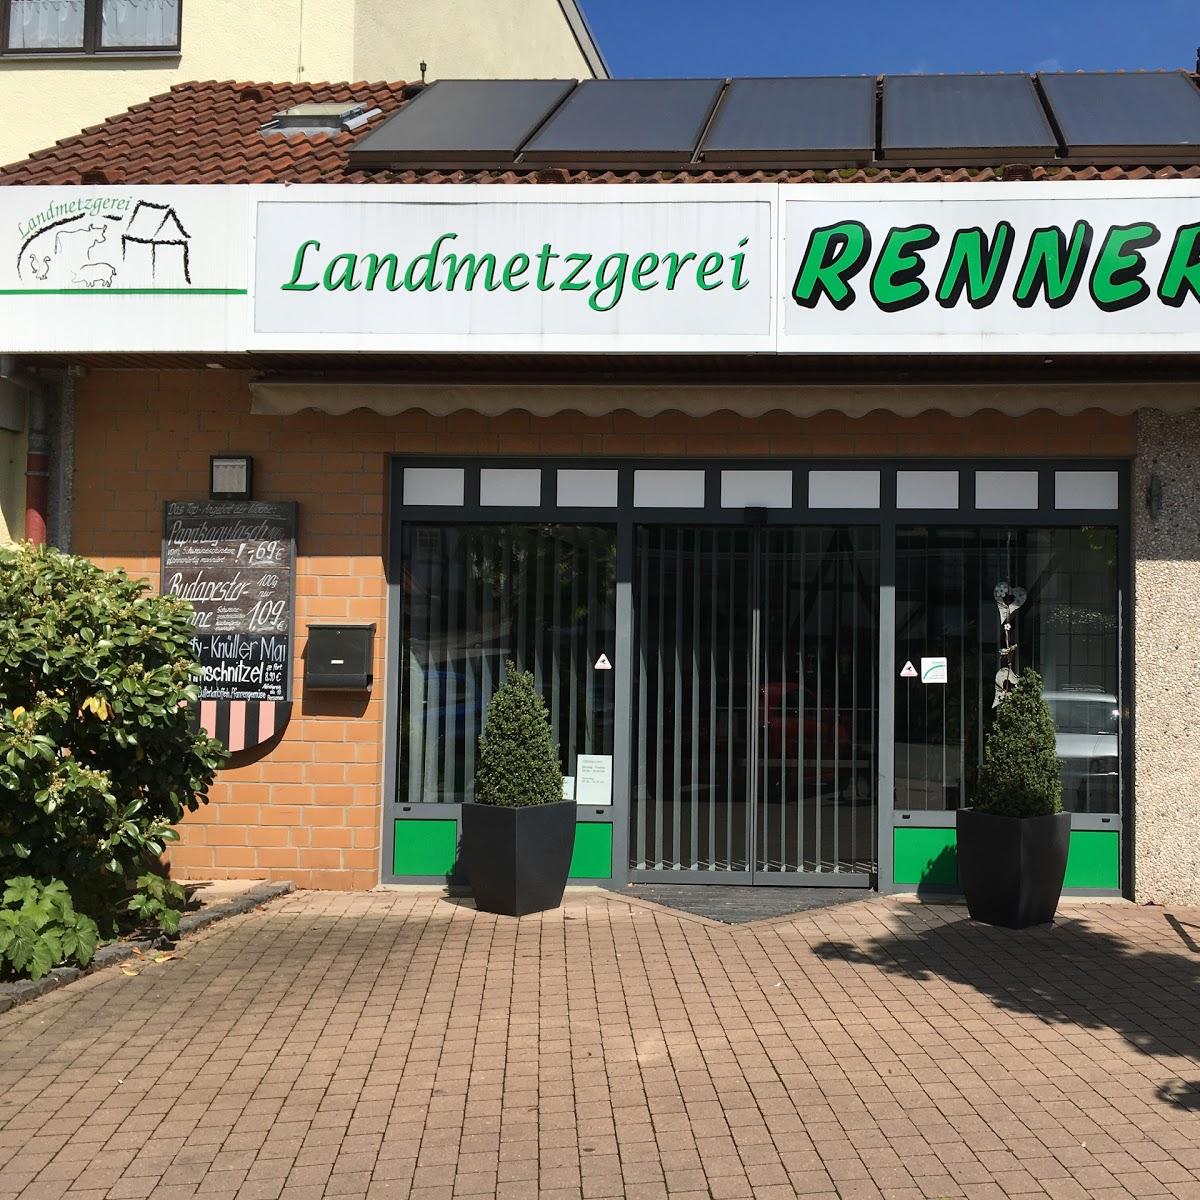 Restaurant "Landmetzgerei Rennert, Partyservice" in Gudensberg